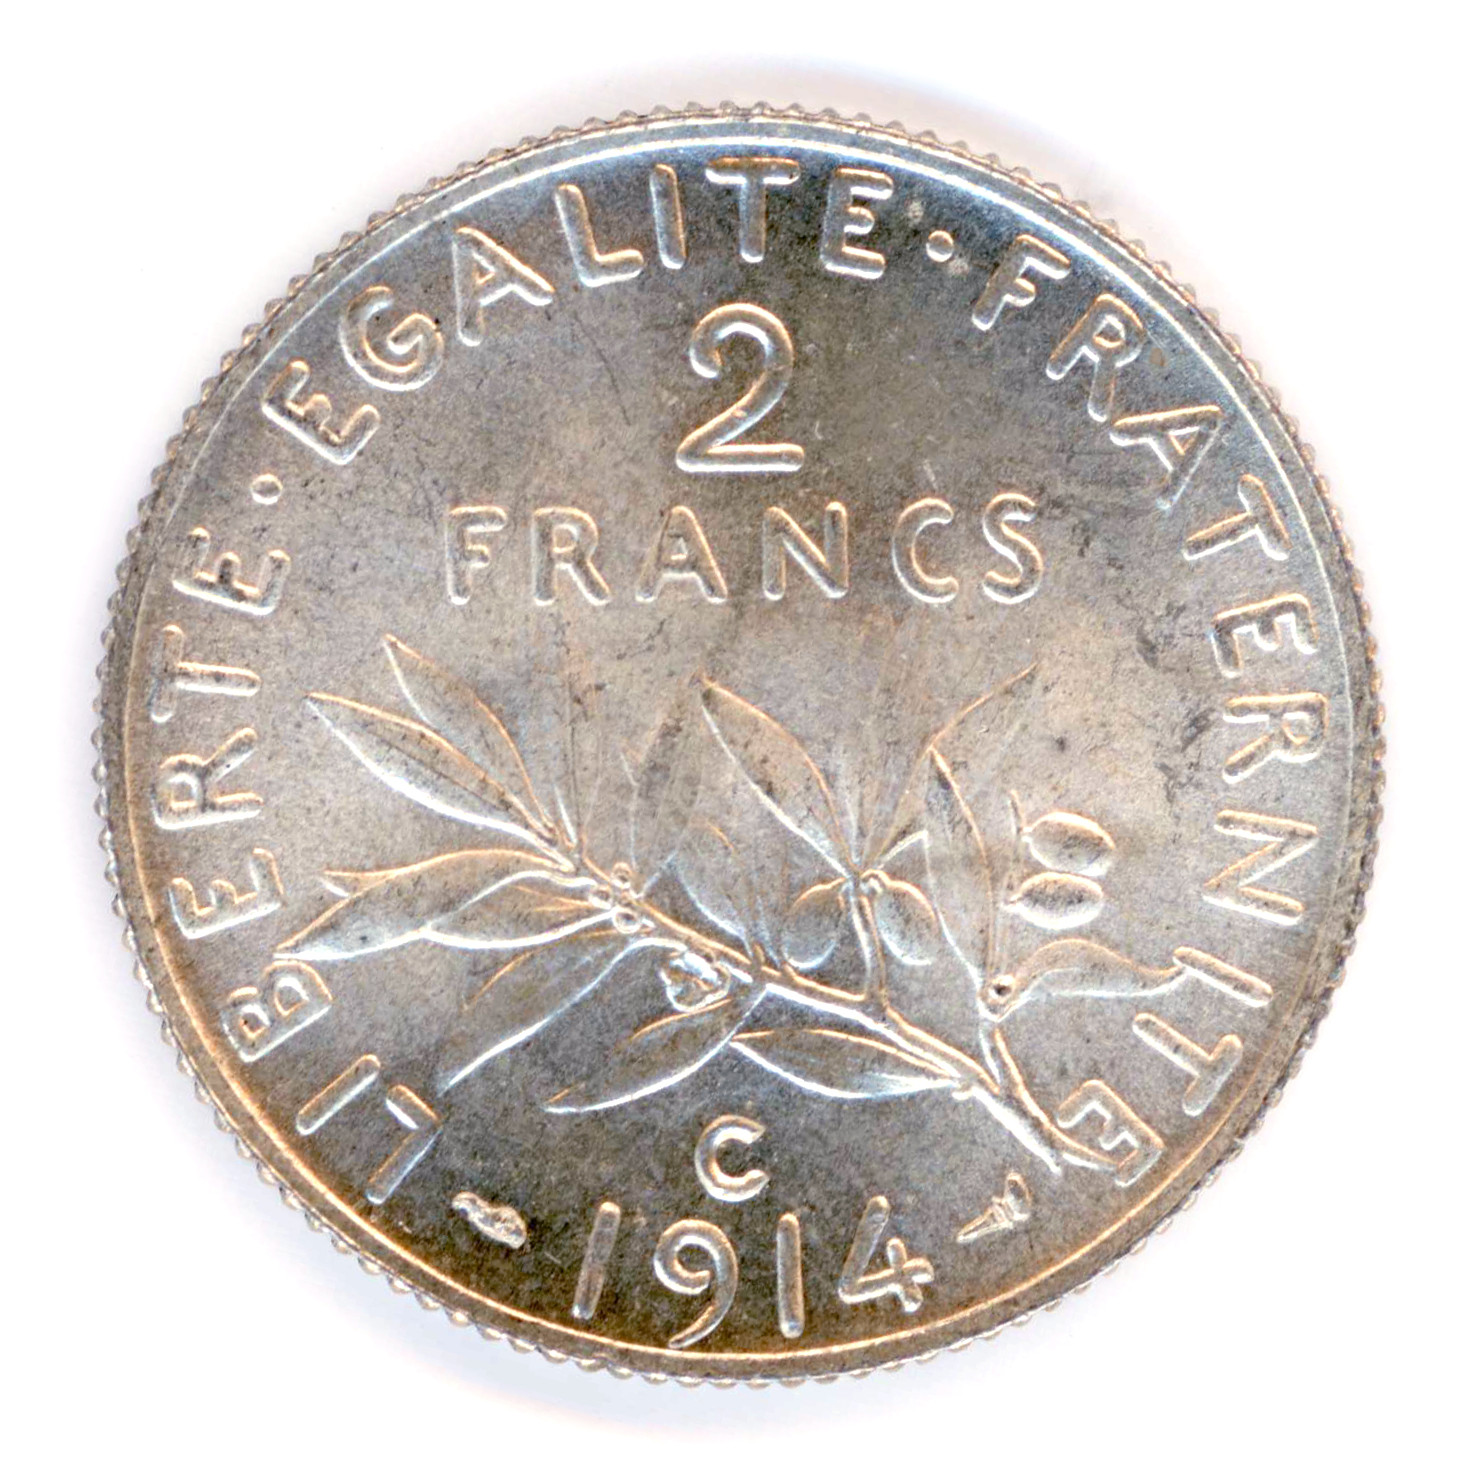 2 Francs Semeuse - 1914 - Castelsarrasin revers